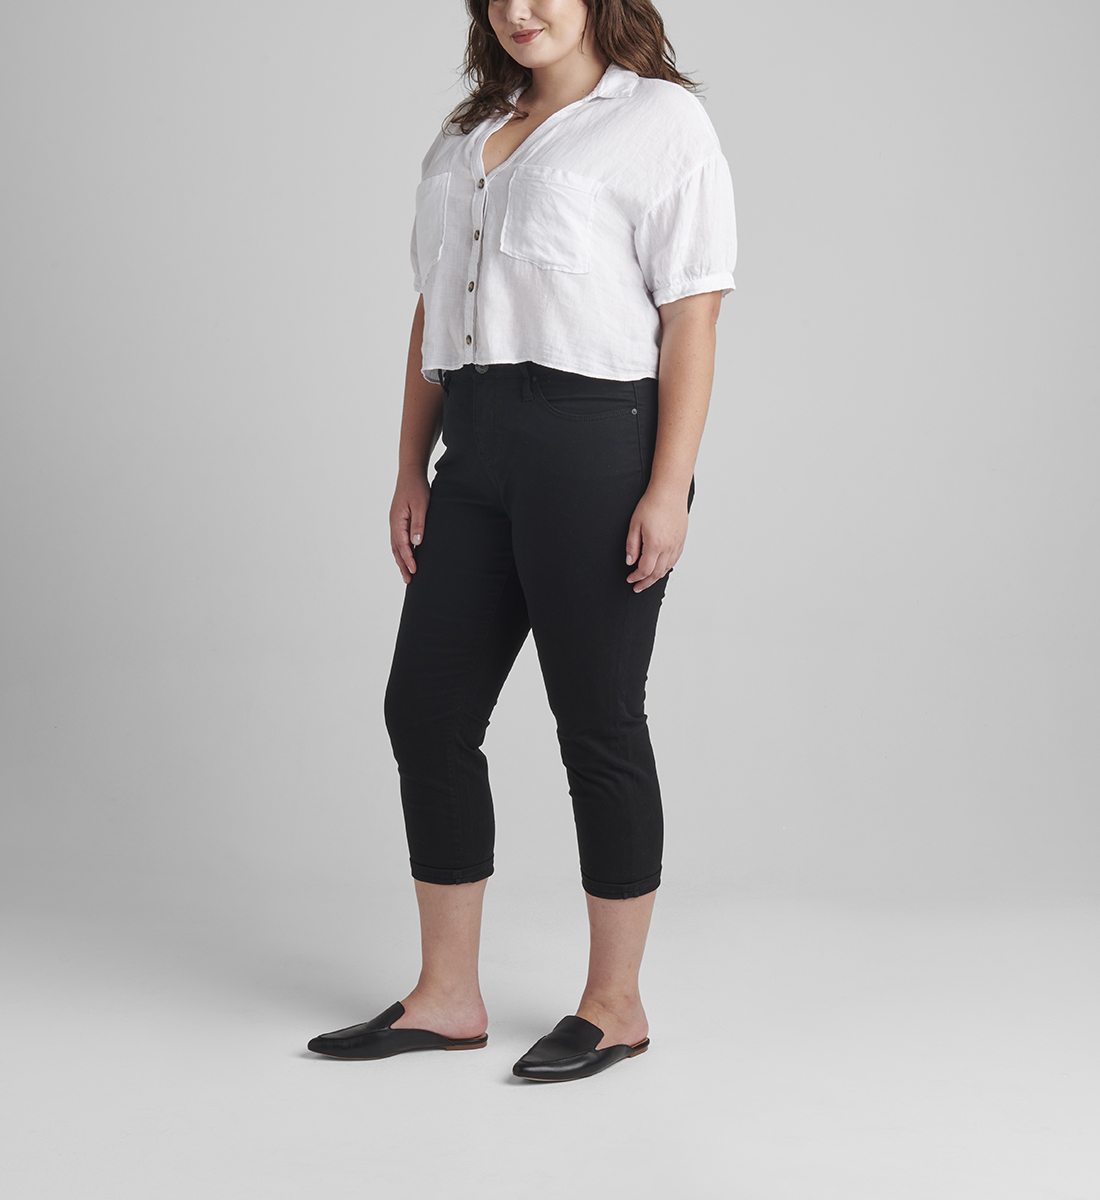 Plus size capris for women black white leggings casual summer high waisted  boho pants workout clothing elastic waist yoga pants - AliExpress